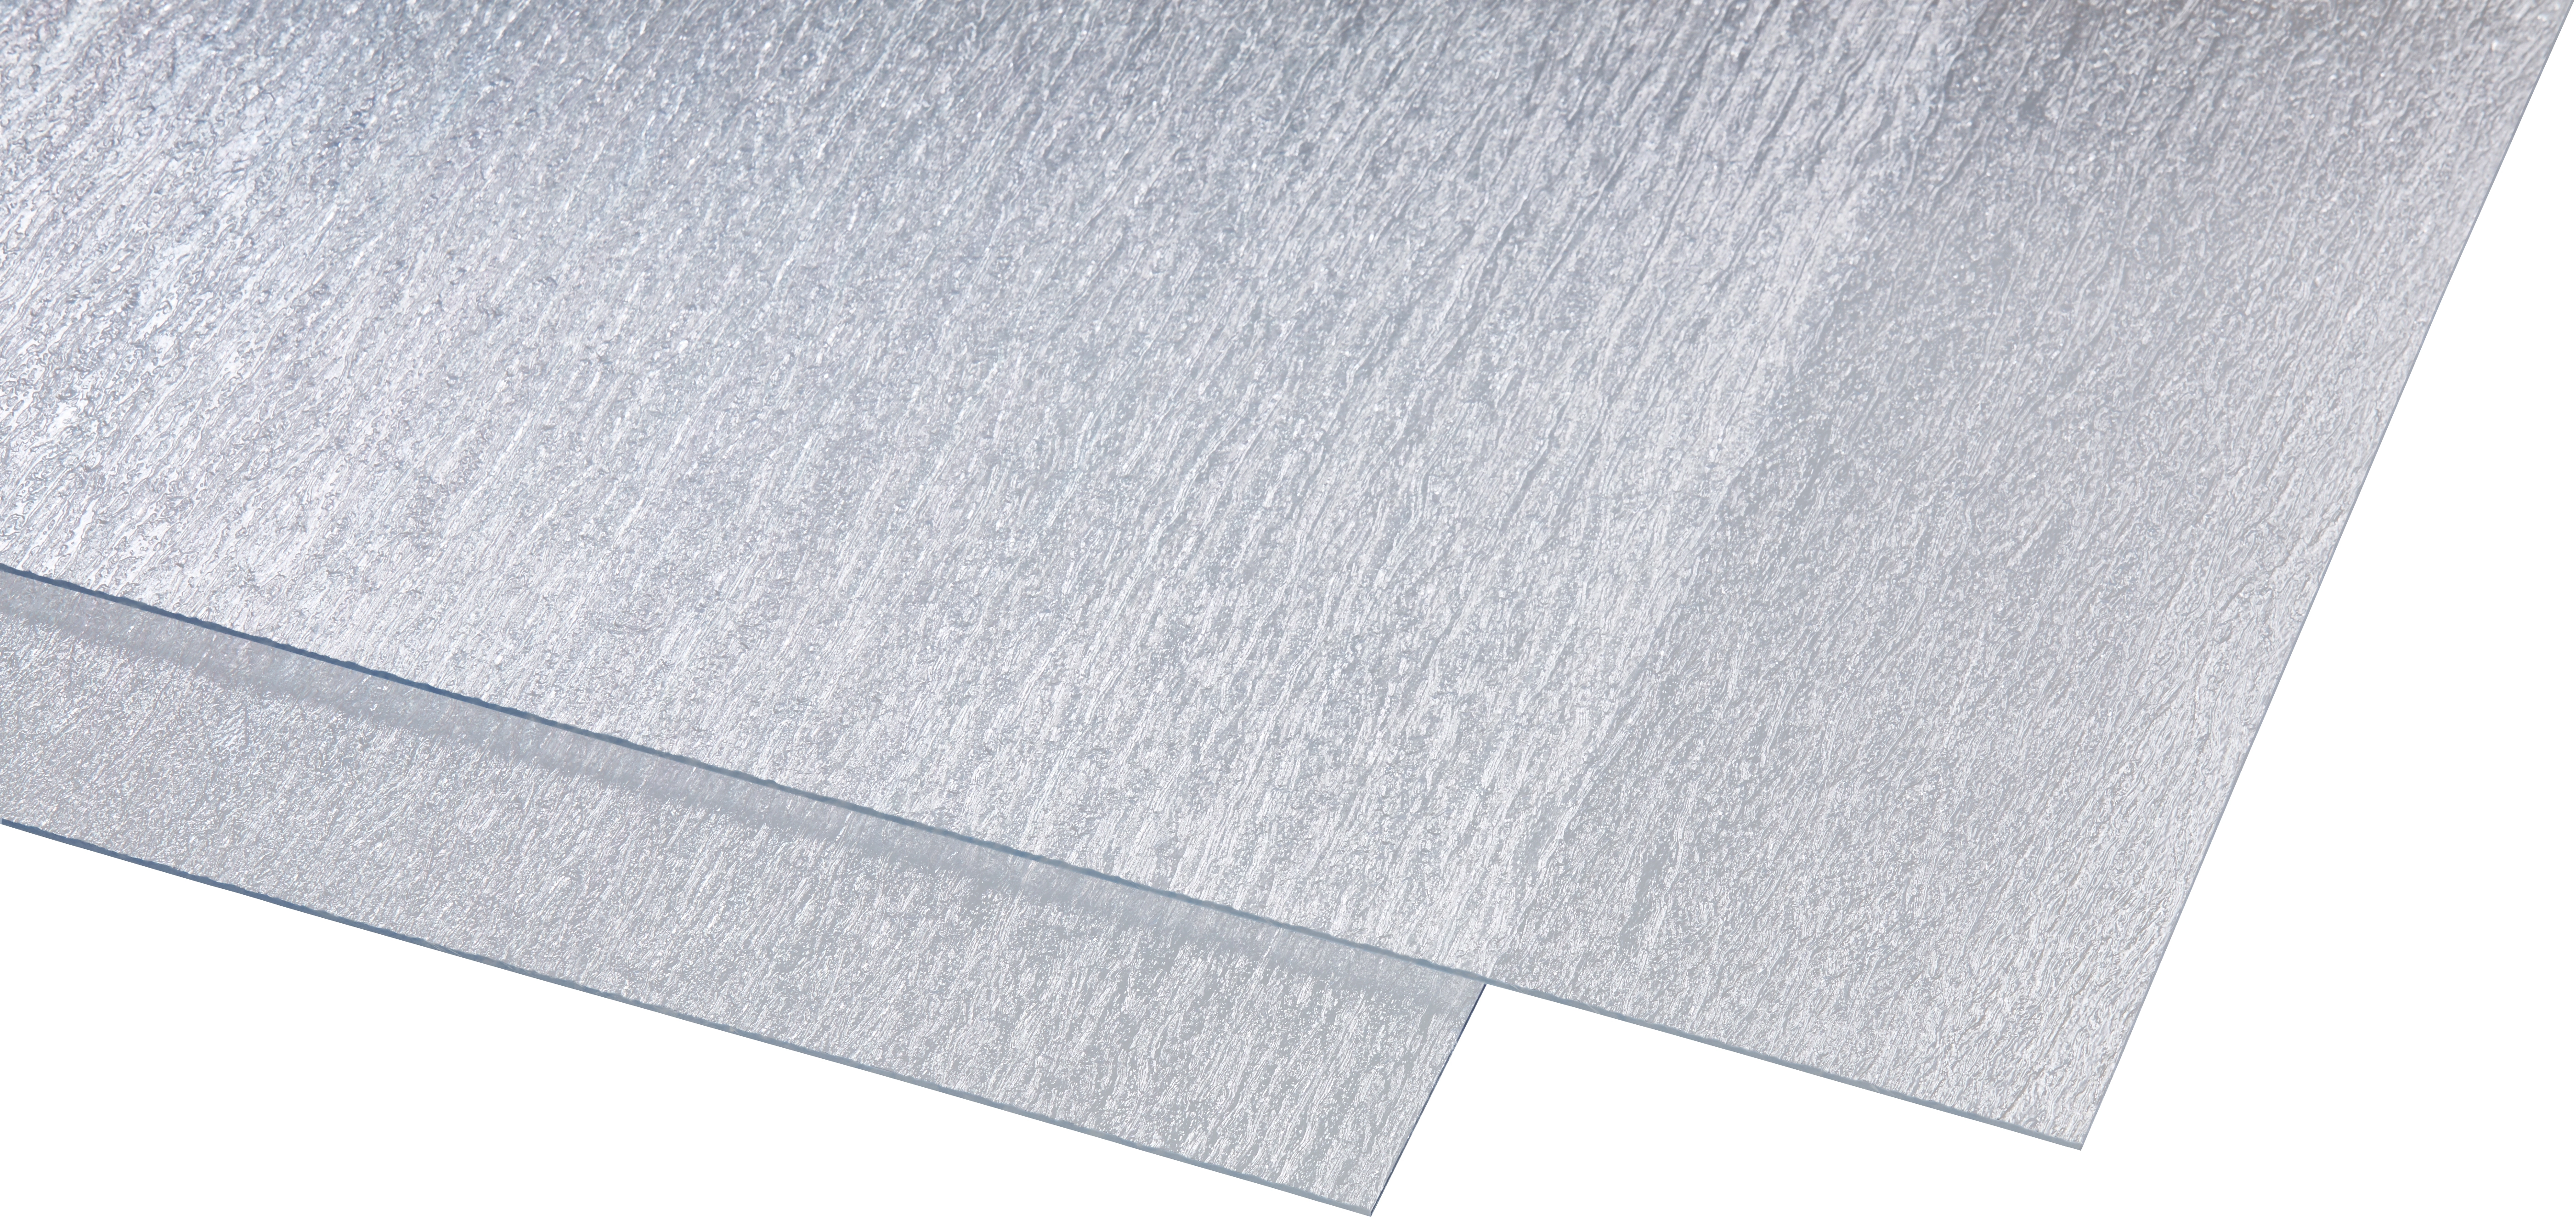 Polystyrol Platte 2,5 mm Rinde Transparent 100 cm x 100 cm kaufen bei OBI